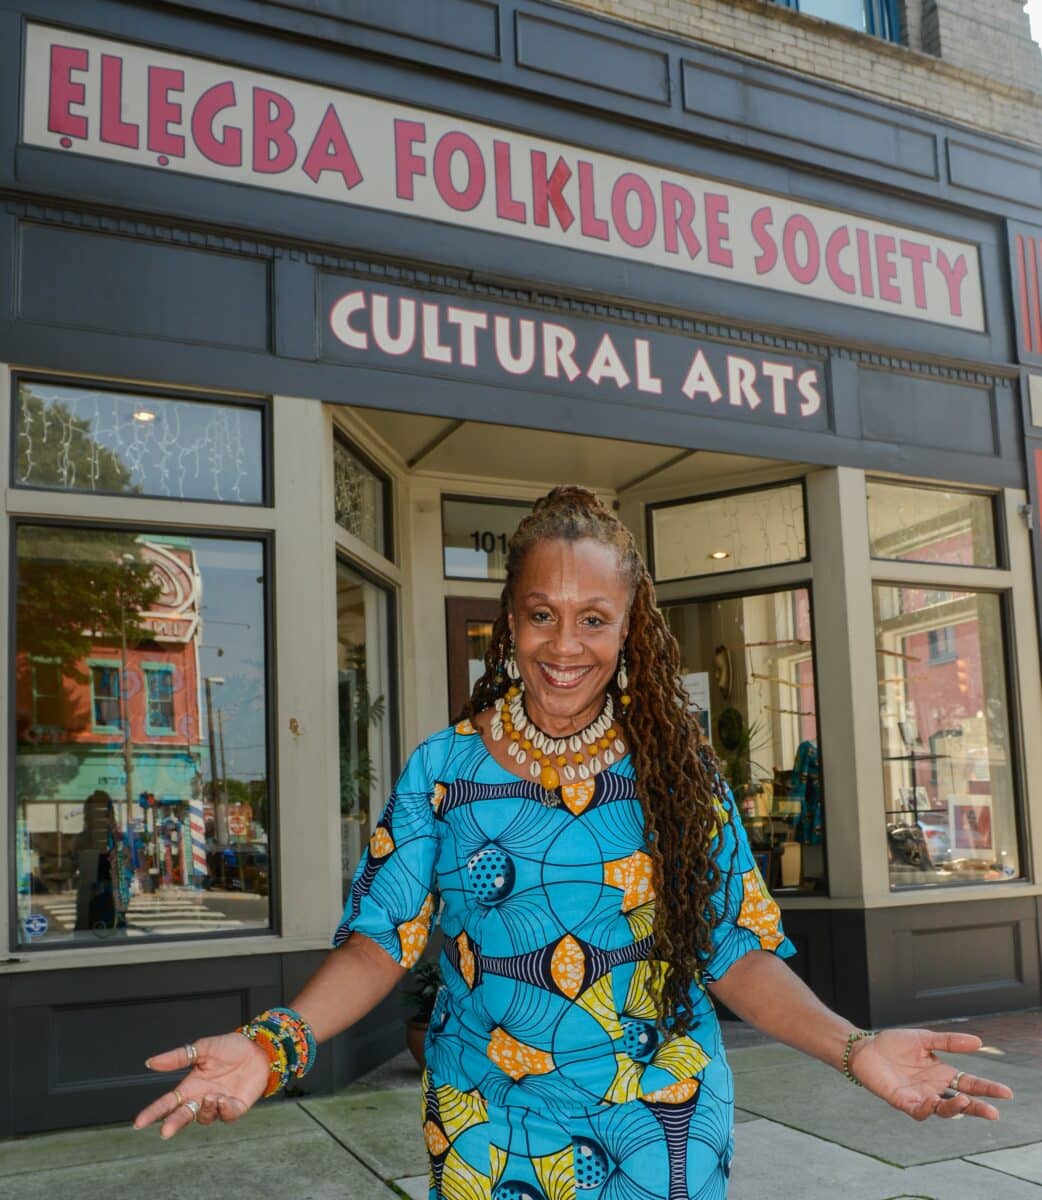 Richmond, Virginia - Janine Bell of Elegba Folklore Society